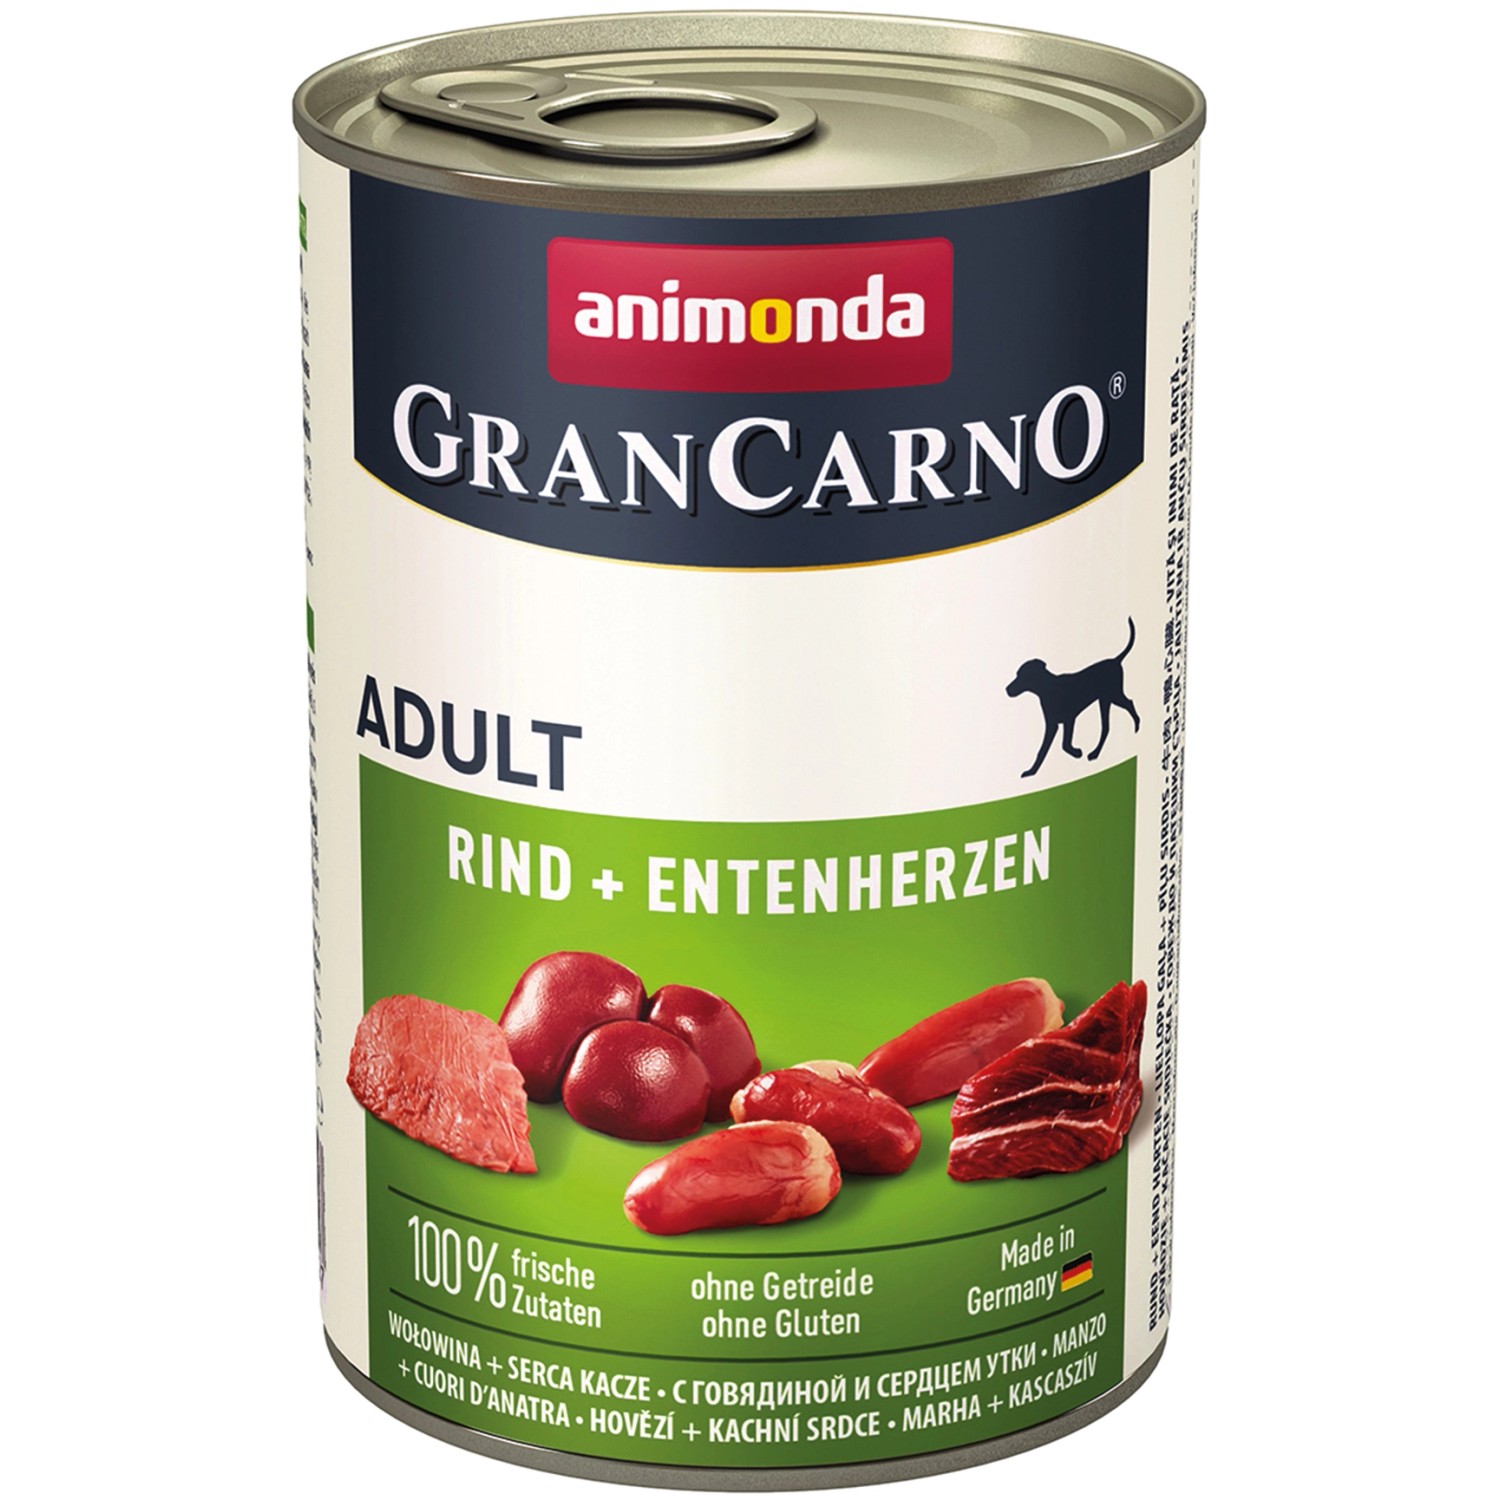 Gran Carno Hunde-Nassfutter Original Adult Rind und Entenherzen 400 g